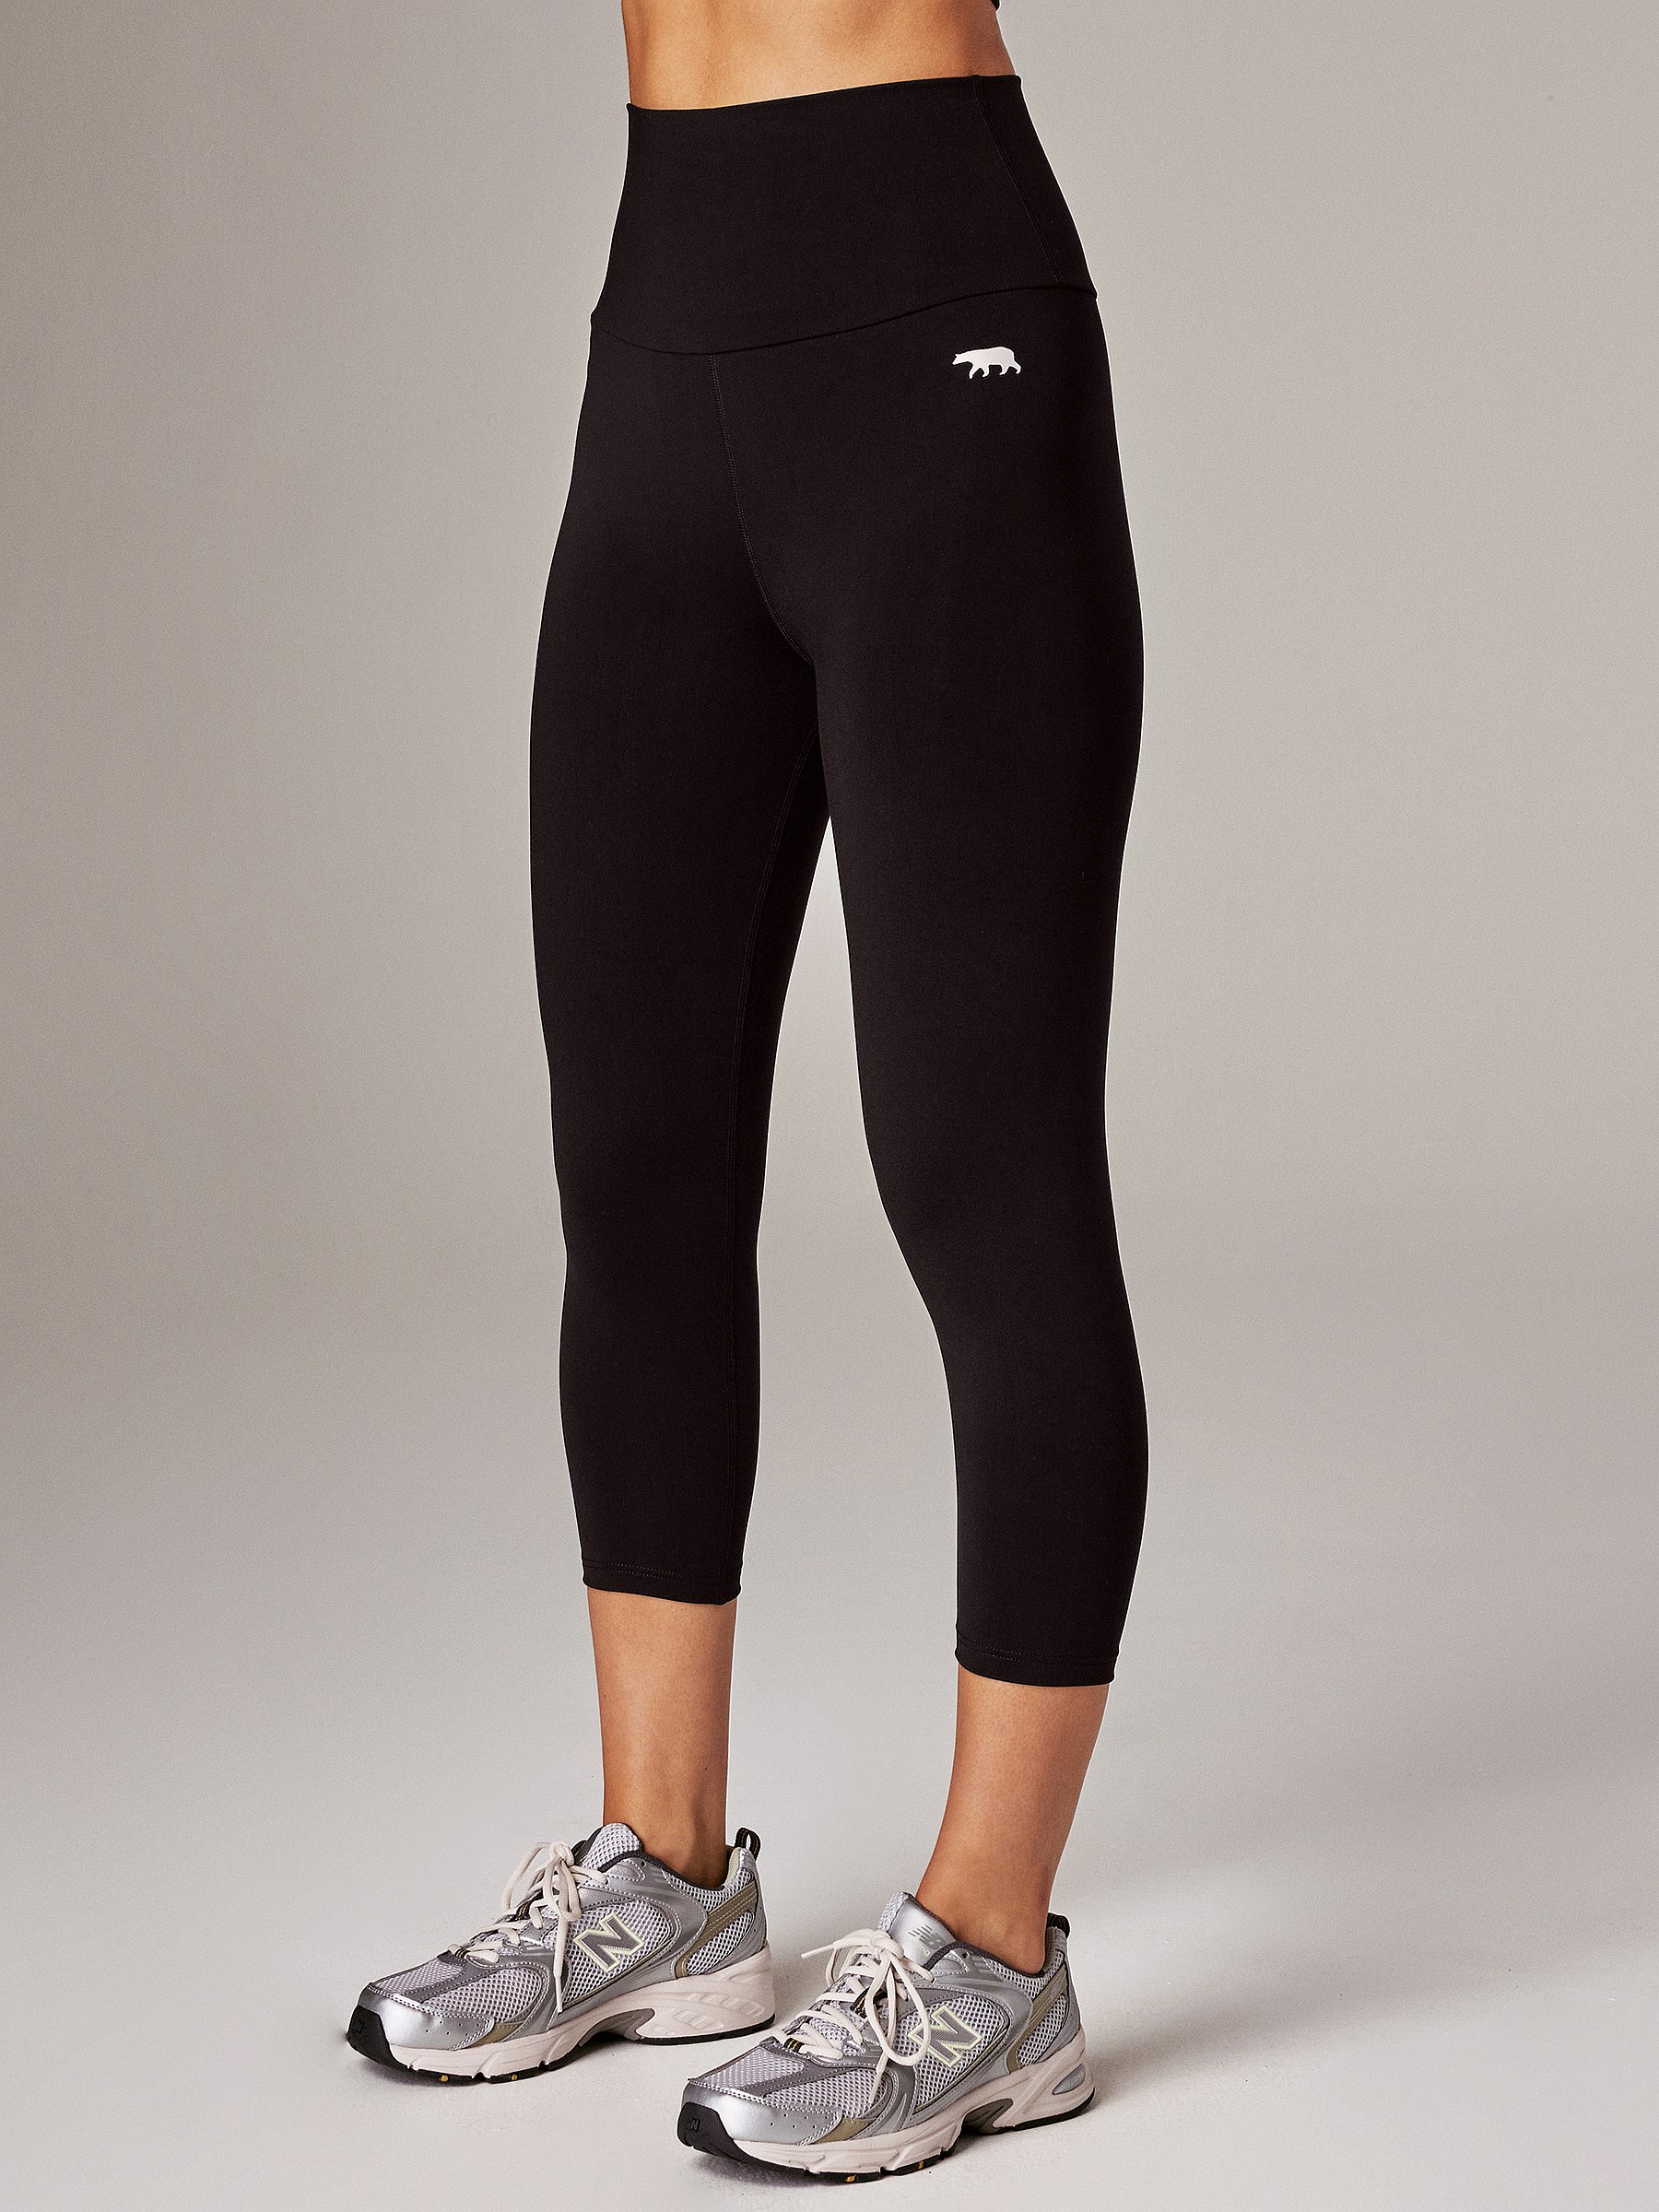 Womens High-Waist Black 3/4 Leggings. Activewear by Running Bare.